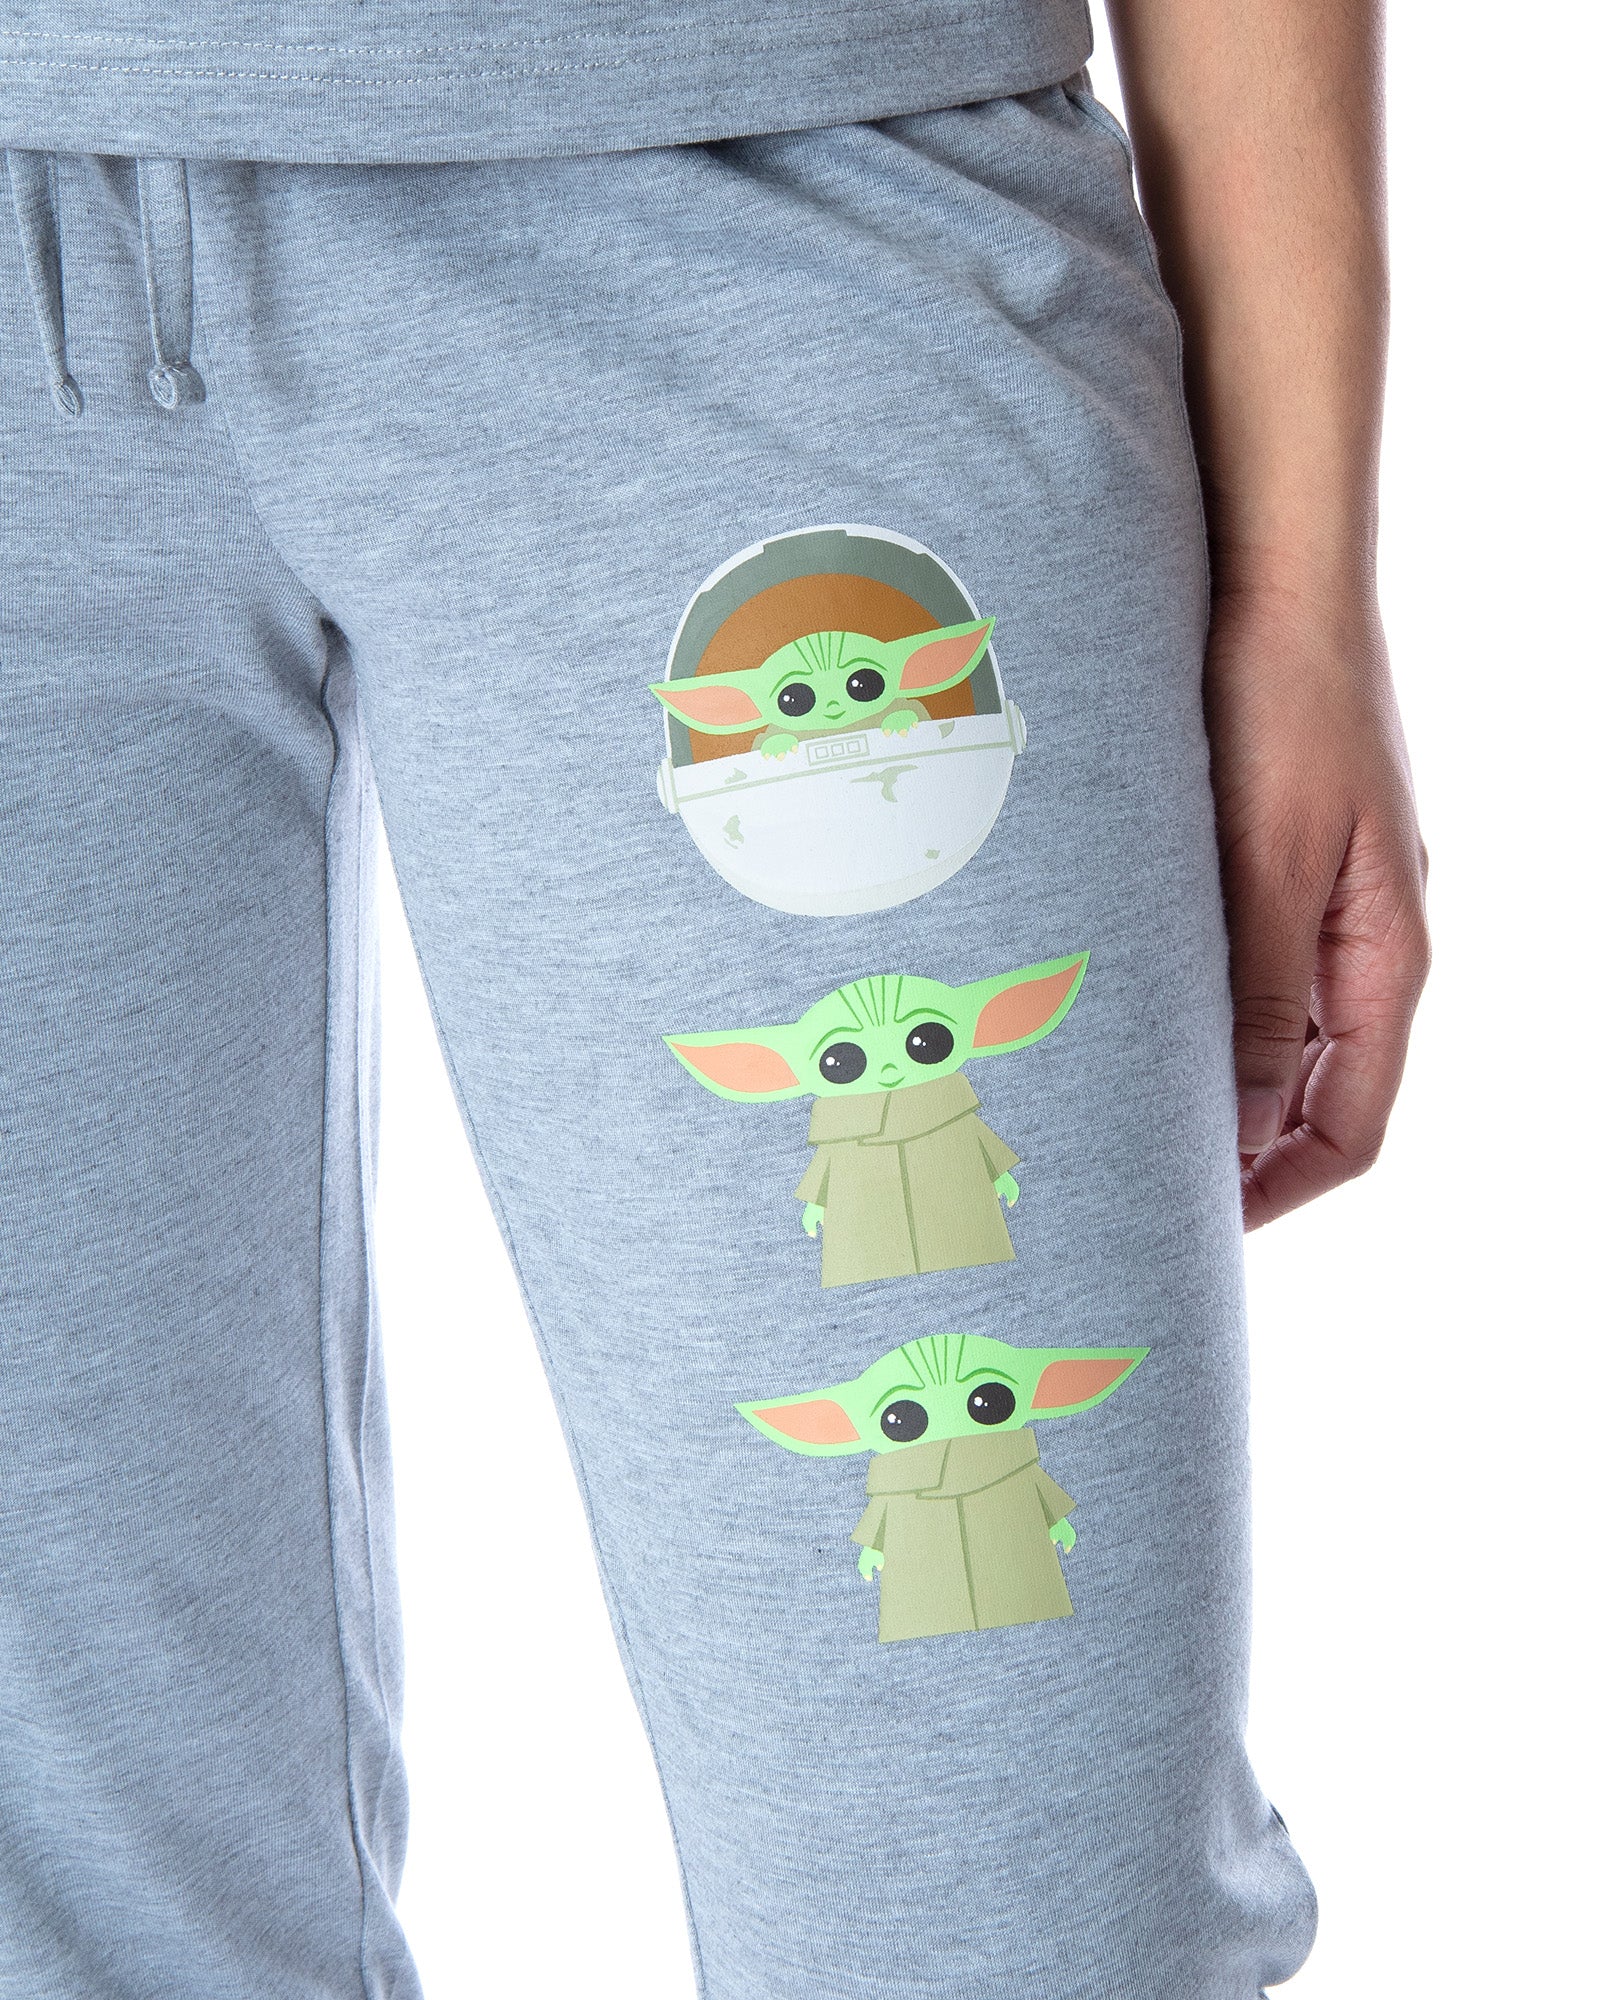 Star Wars Ladies' 2-Piece Pajama Set 